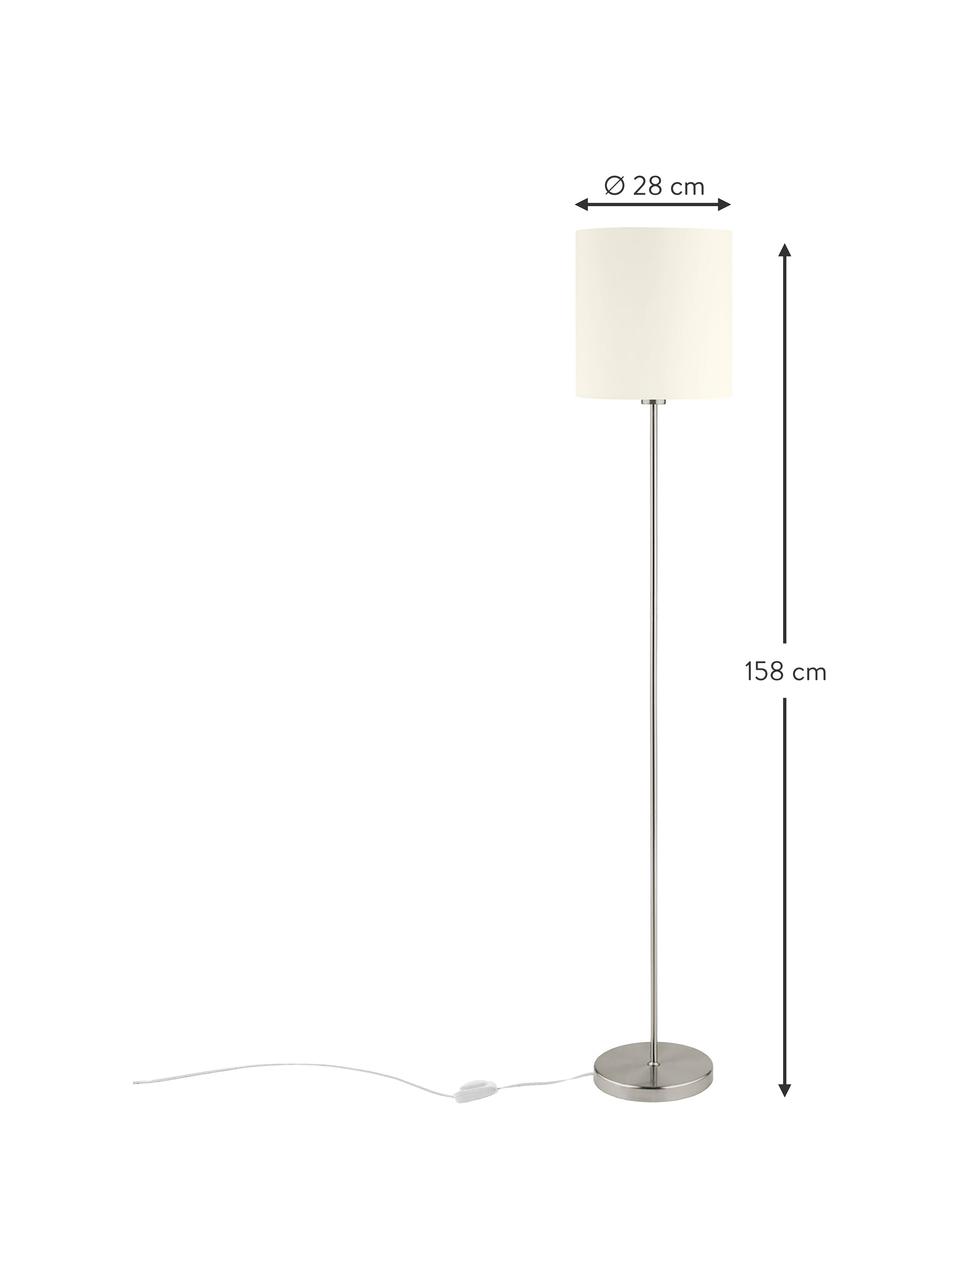 Stehlampe Mick-Silber, Lampenschirm: Textil, Weiss, Silberfarben, H 158 cm